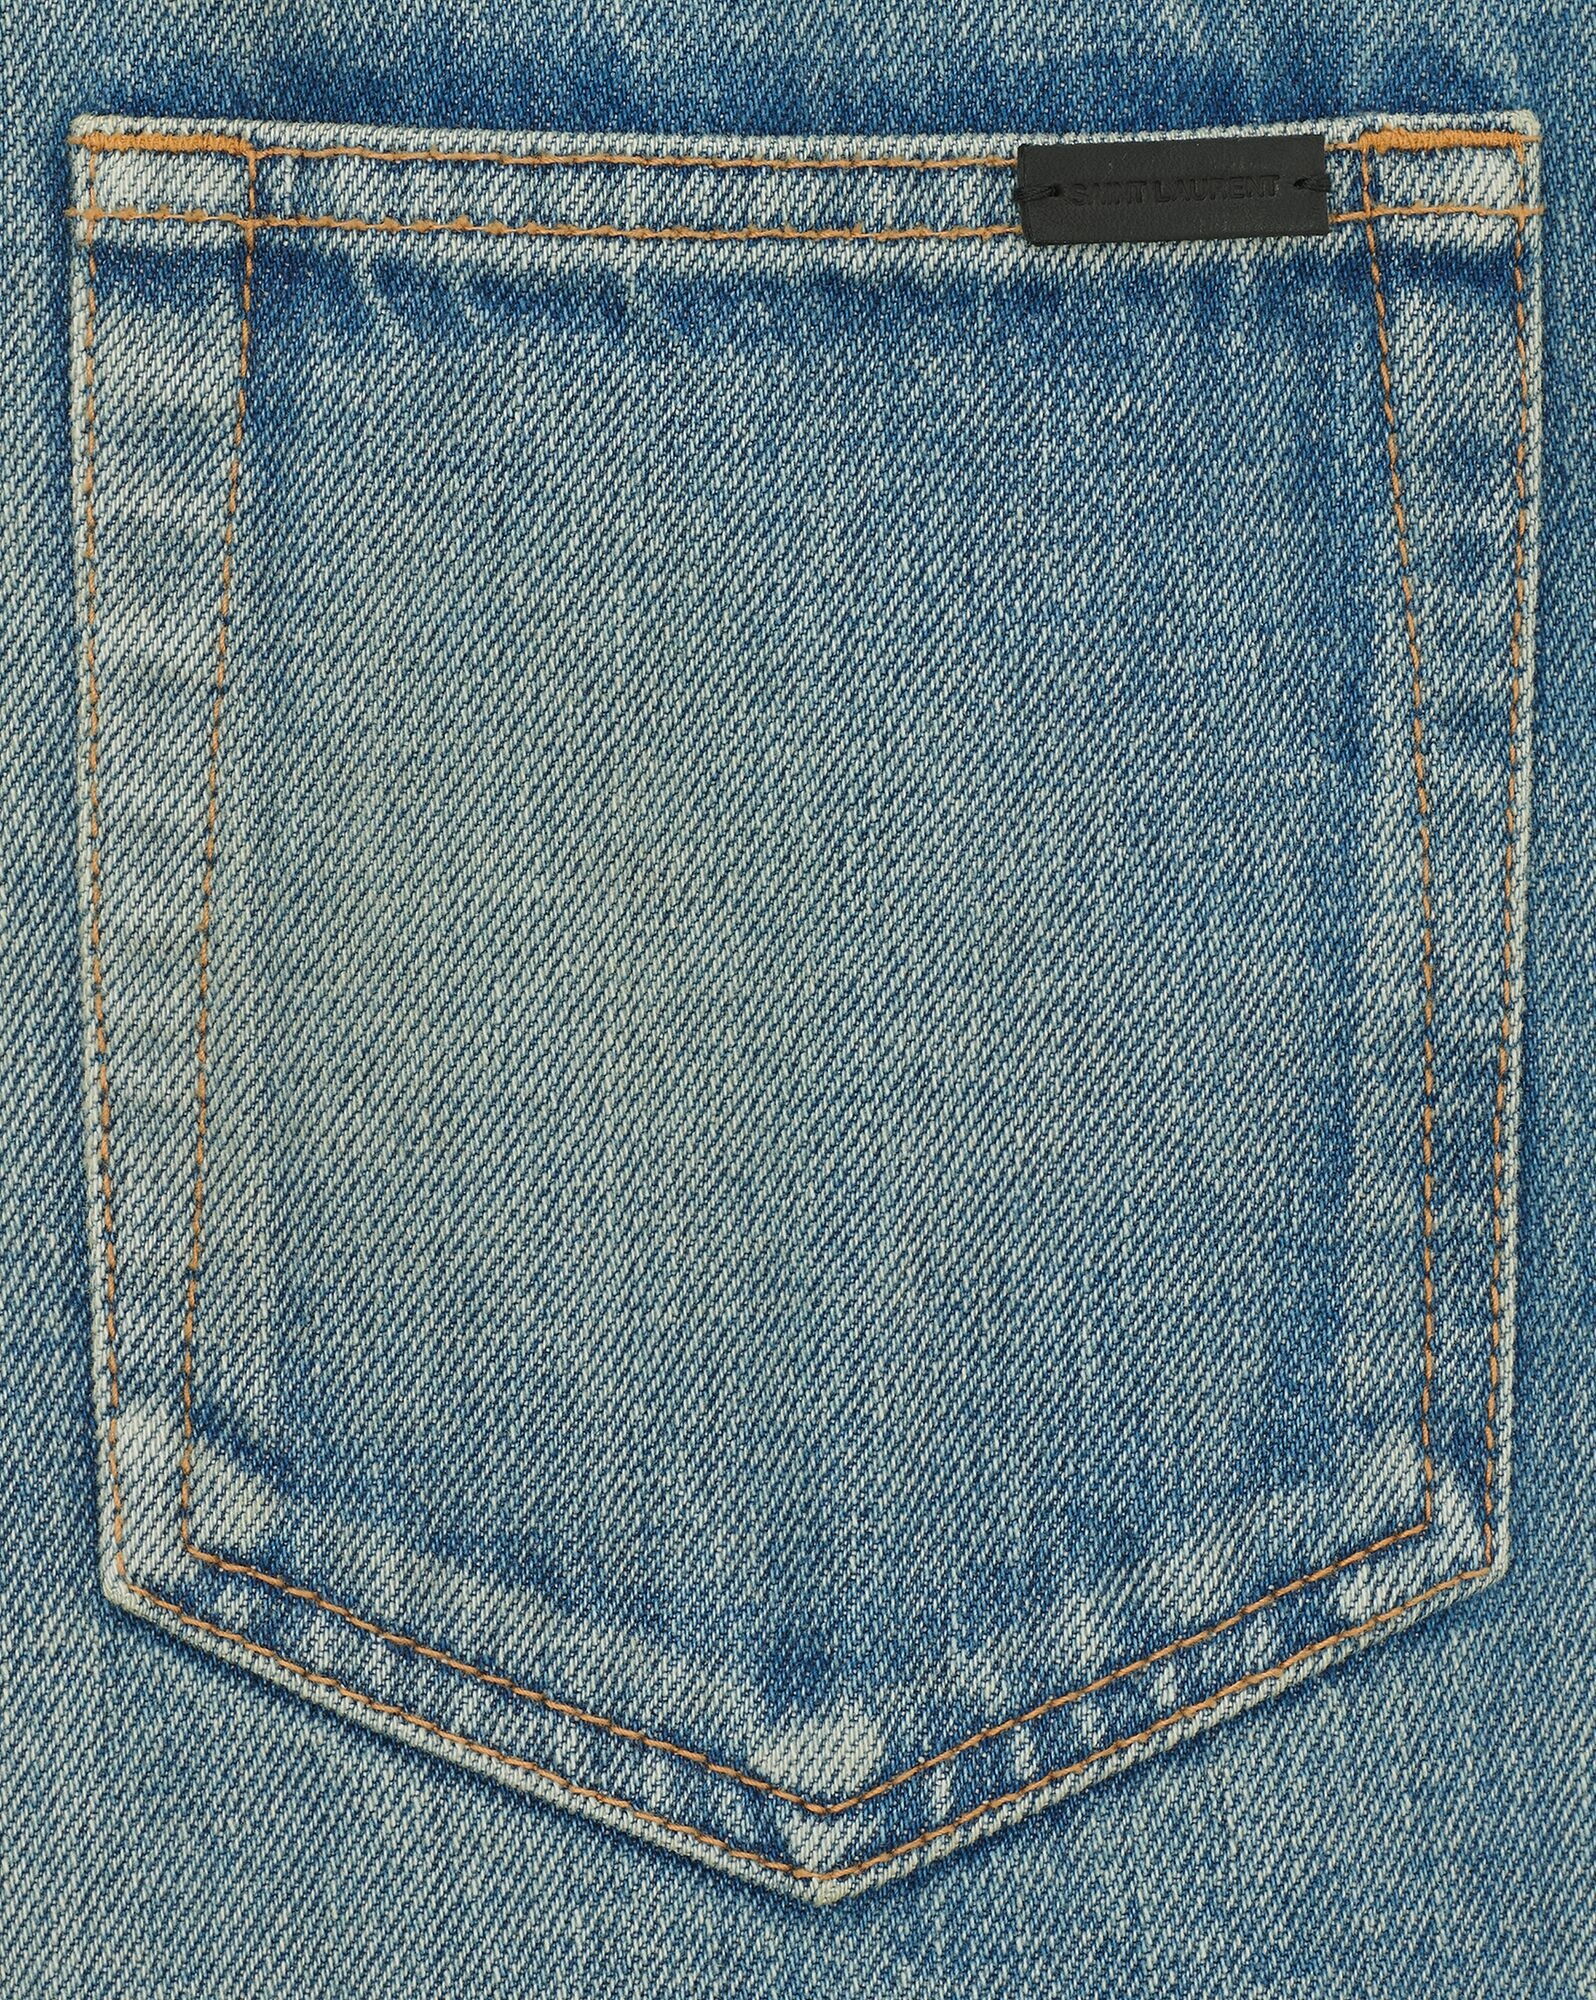 70's flared jeans in medium blue denim - 4